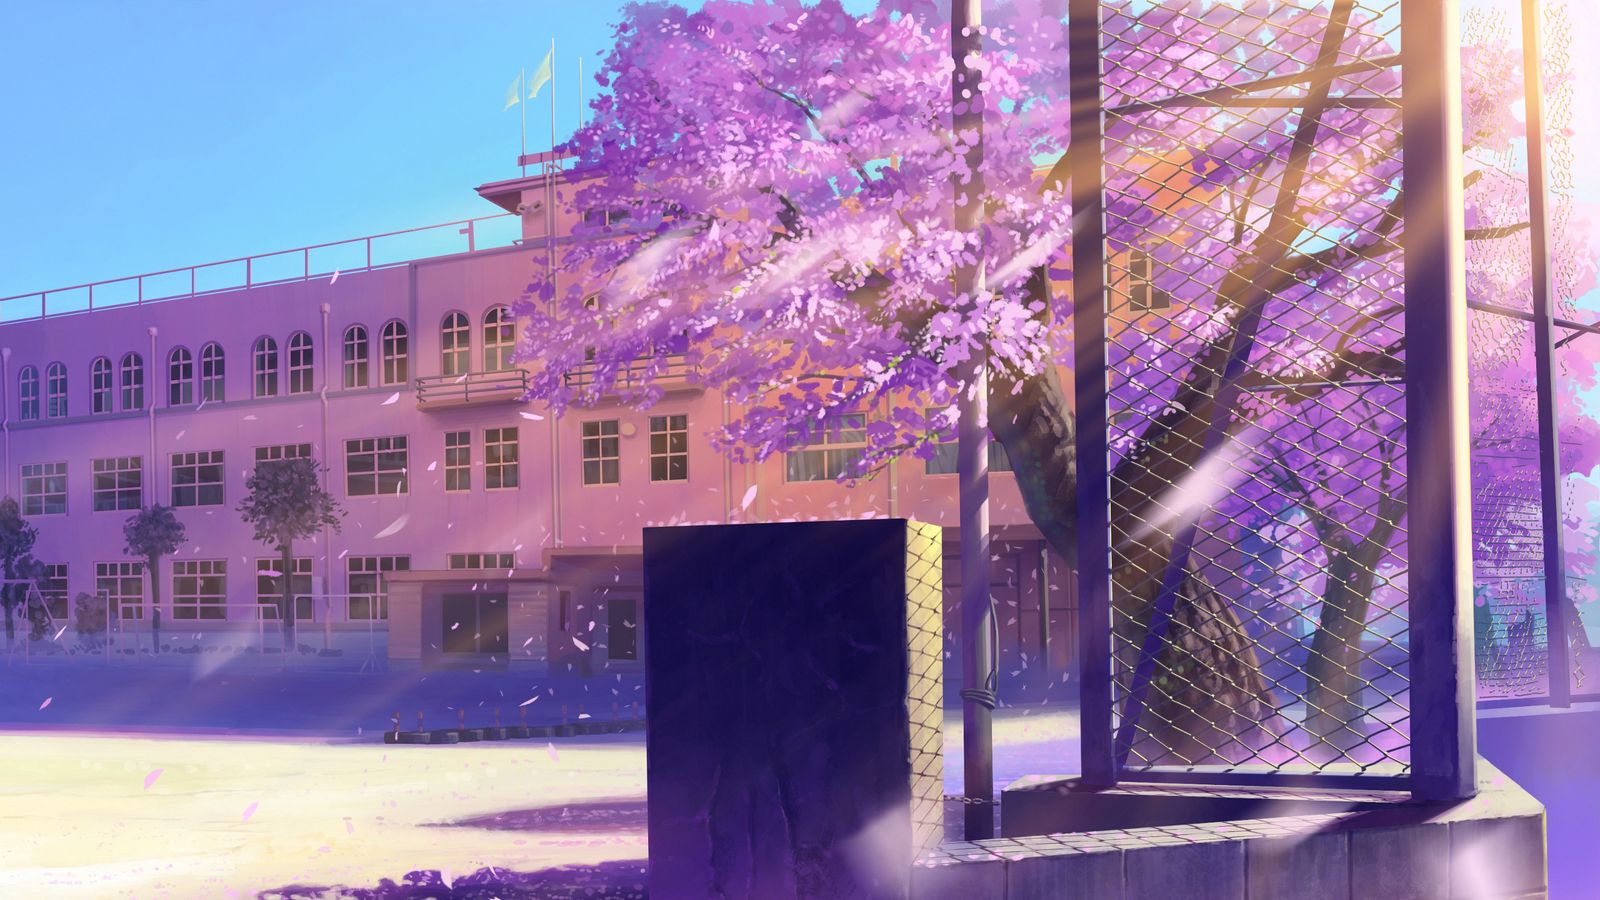 Download wallpaper 1600x900 anime, school, winter street widescreen 16:9 HD background